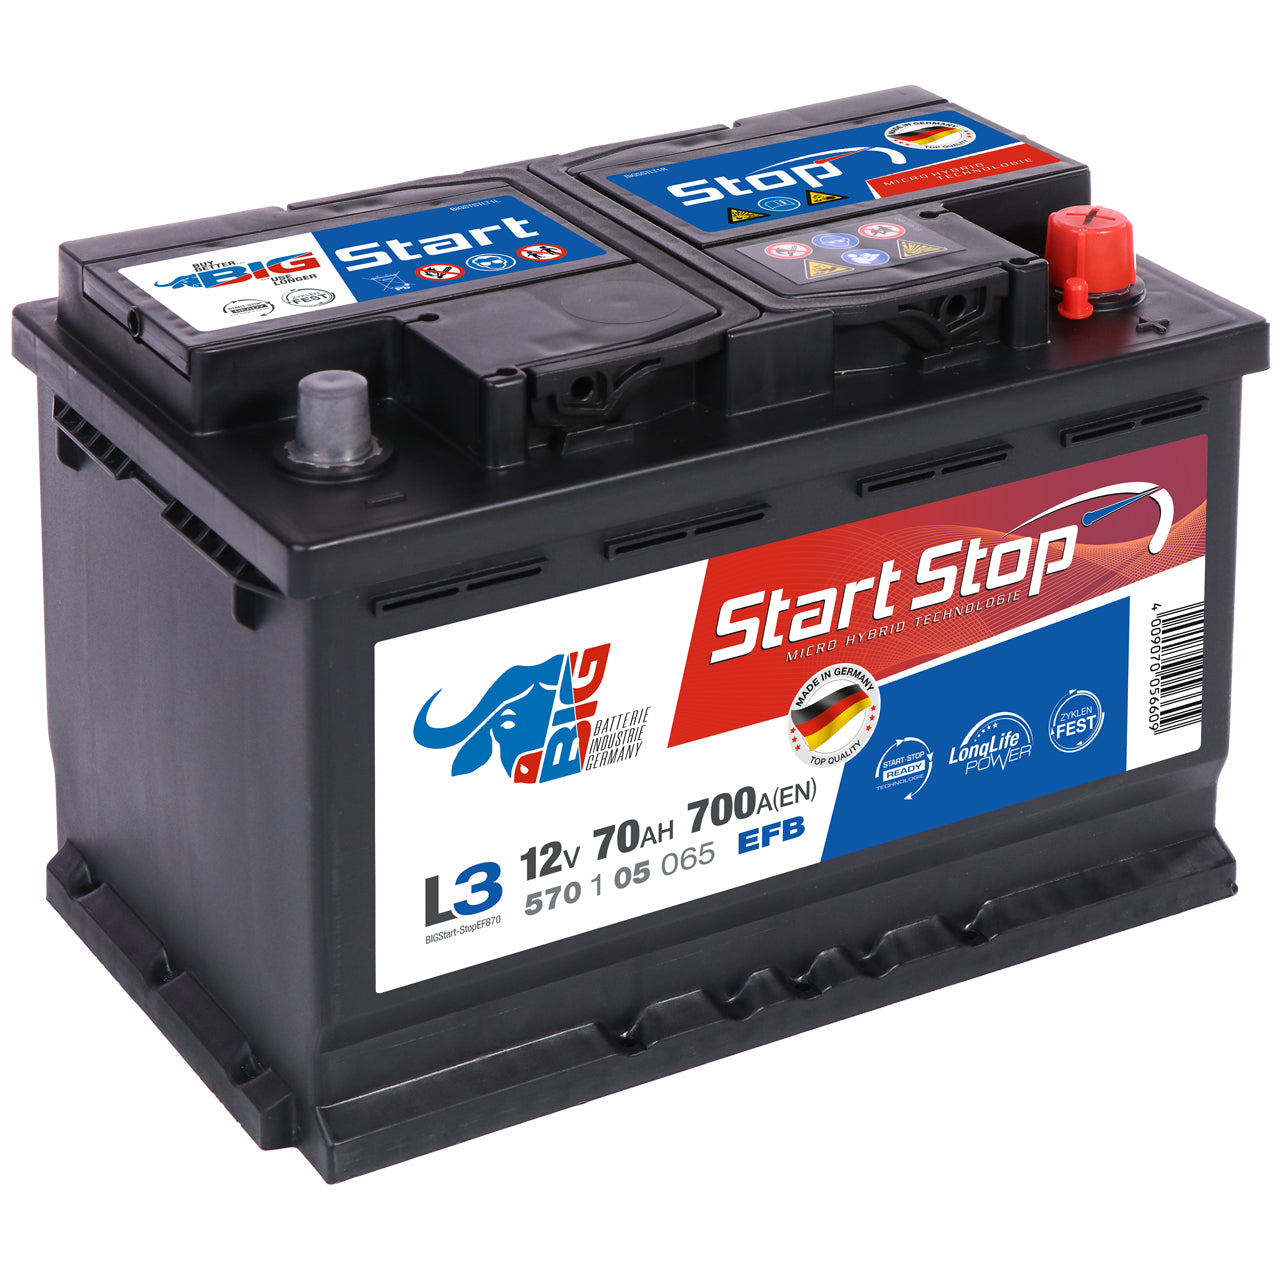 BSA AGM Batterie 65Ah 12V 700A/EN Start-Stop Batterie Autobatterie